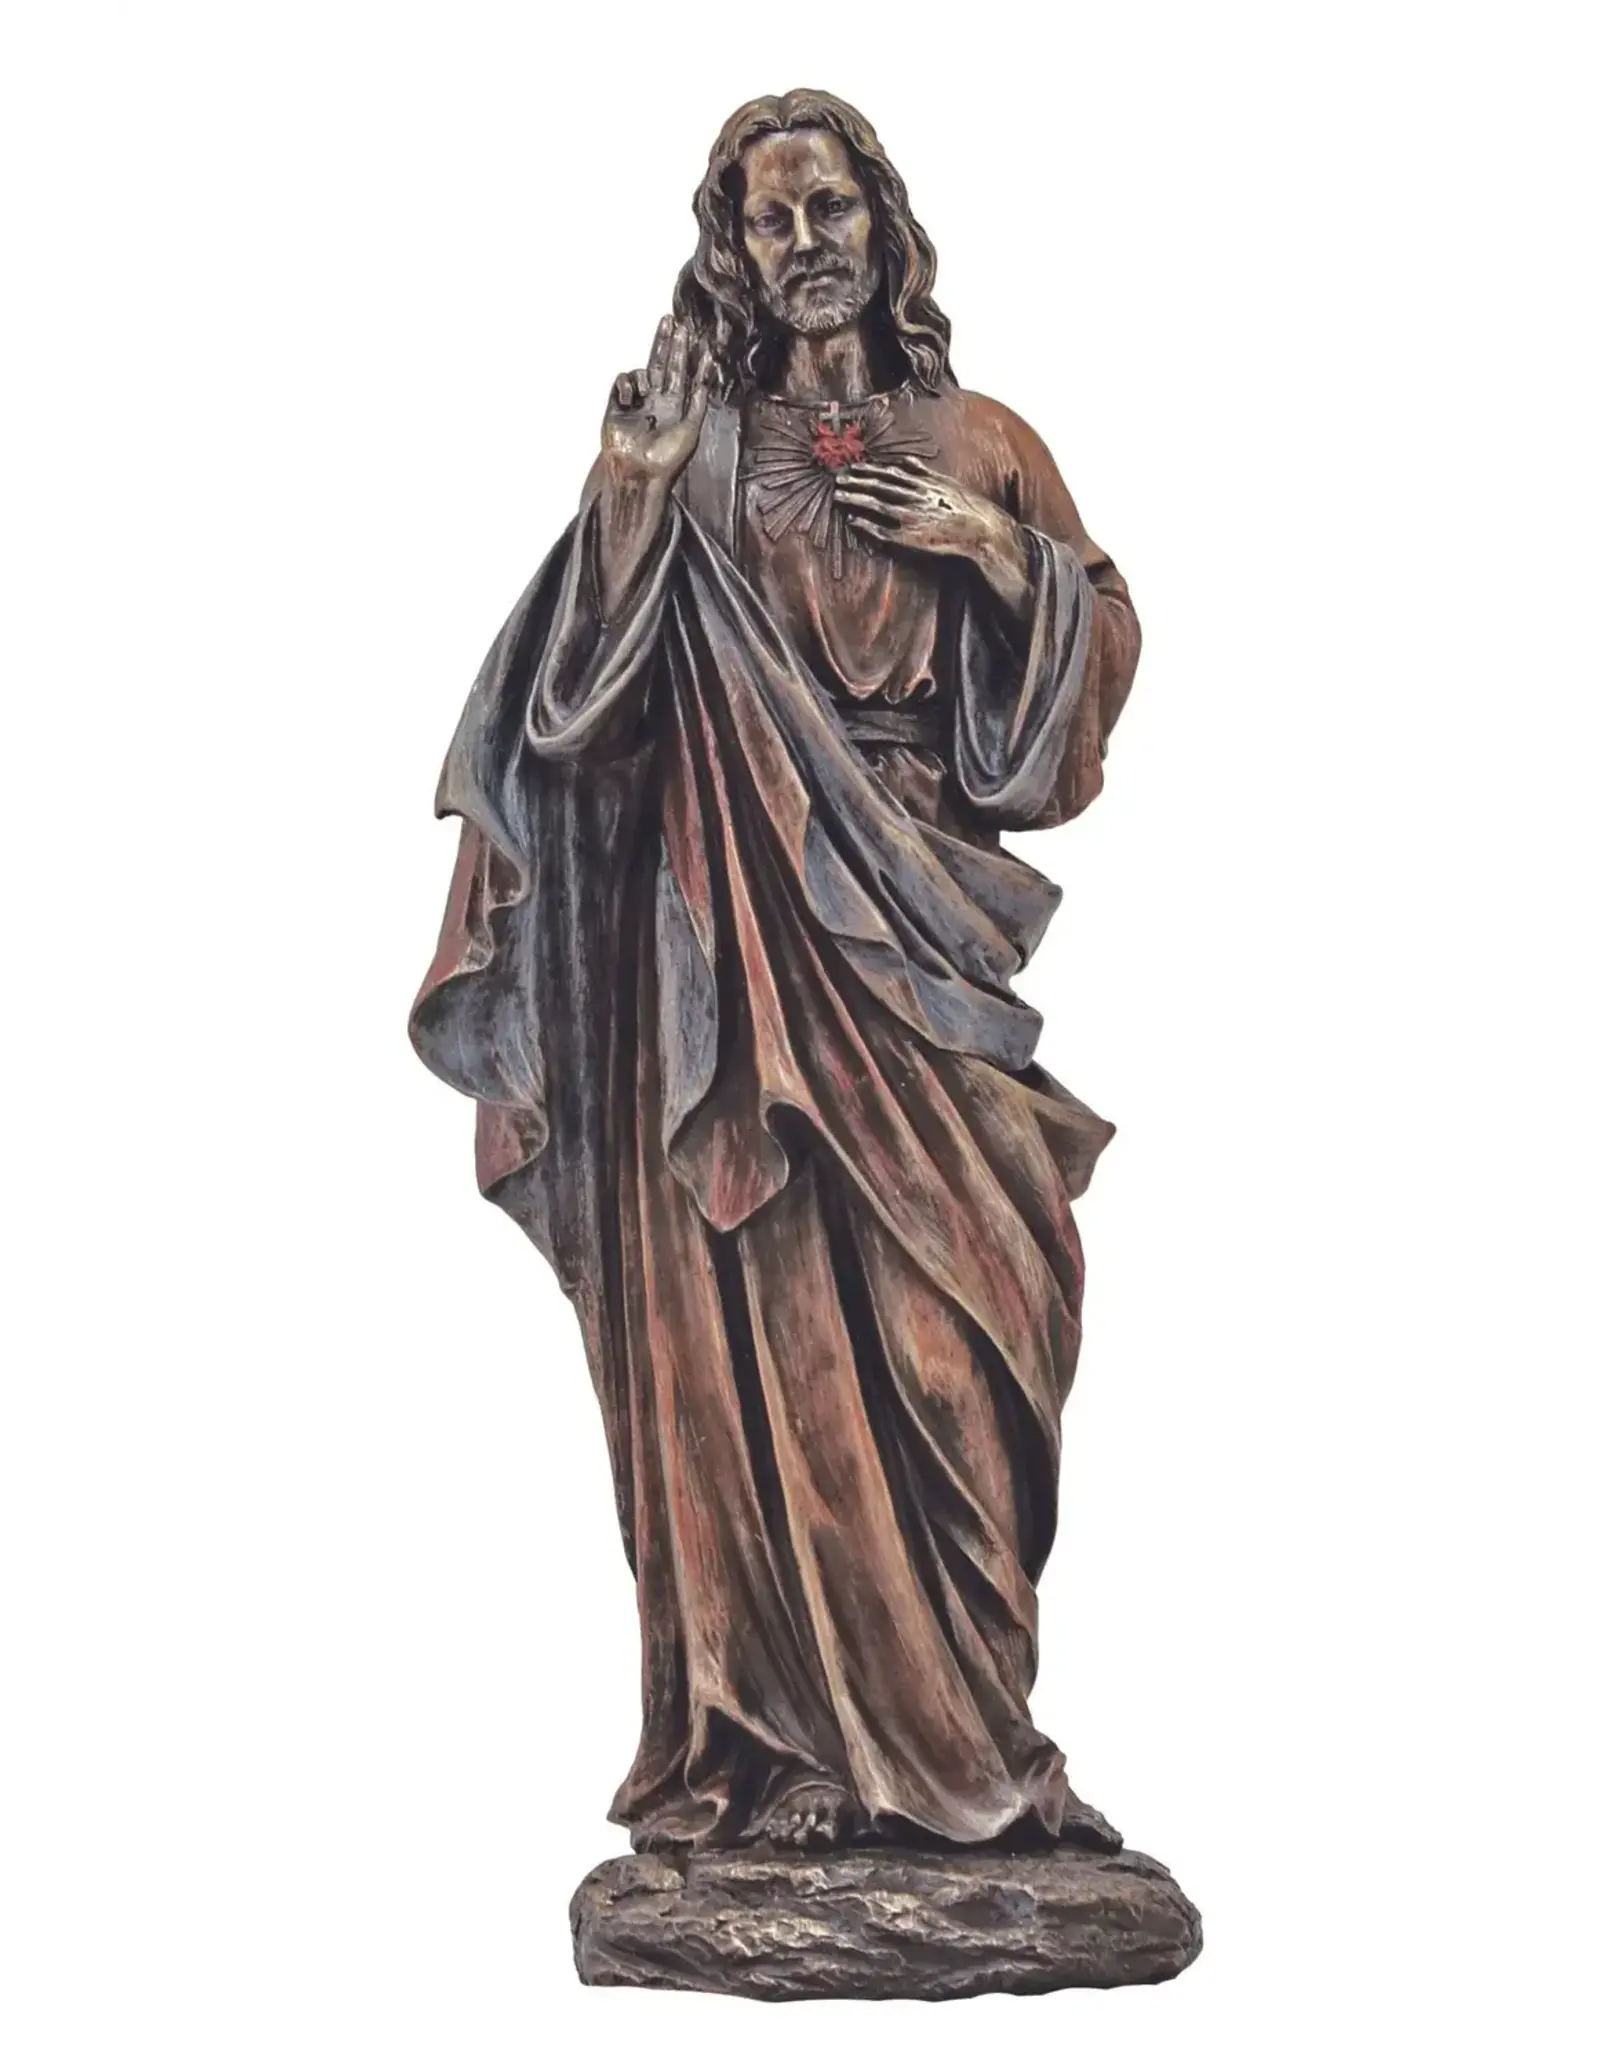 Goldscheider Sacred Heart of Jesus Statue - Bronze (10")